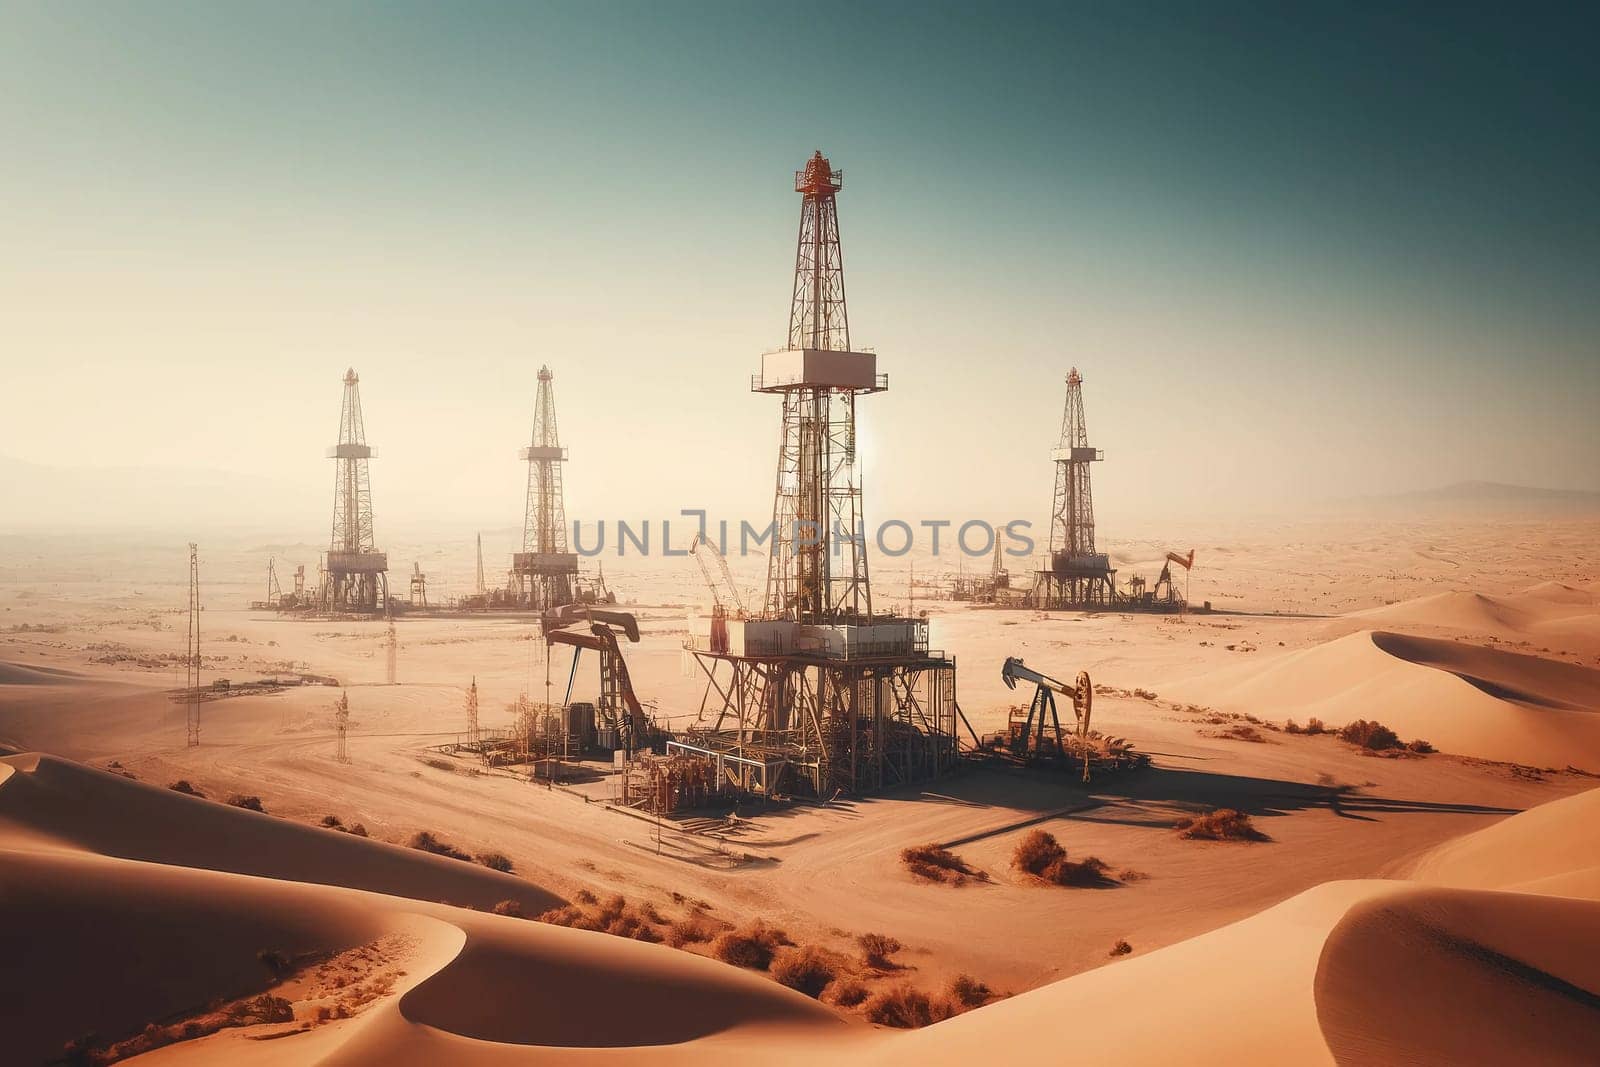 oil rigs in desert landscape under clear blue sky.